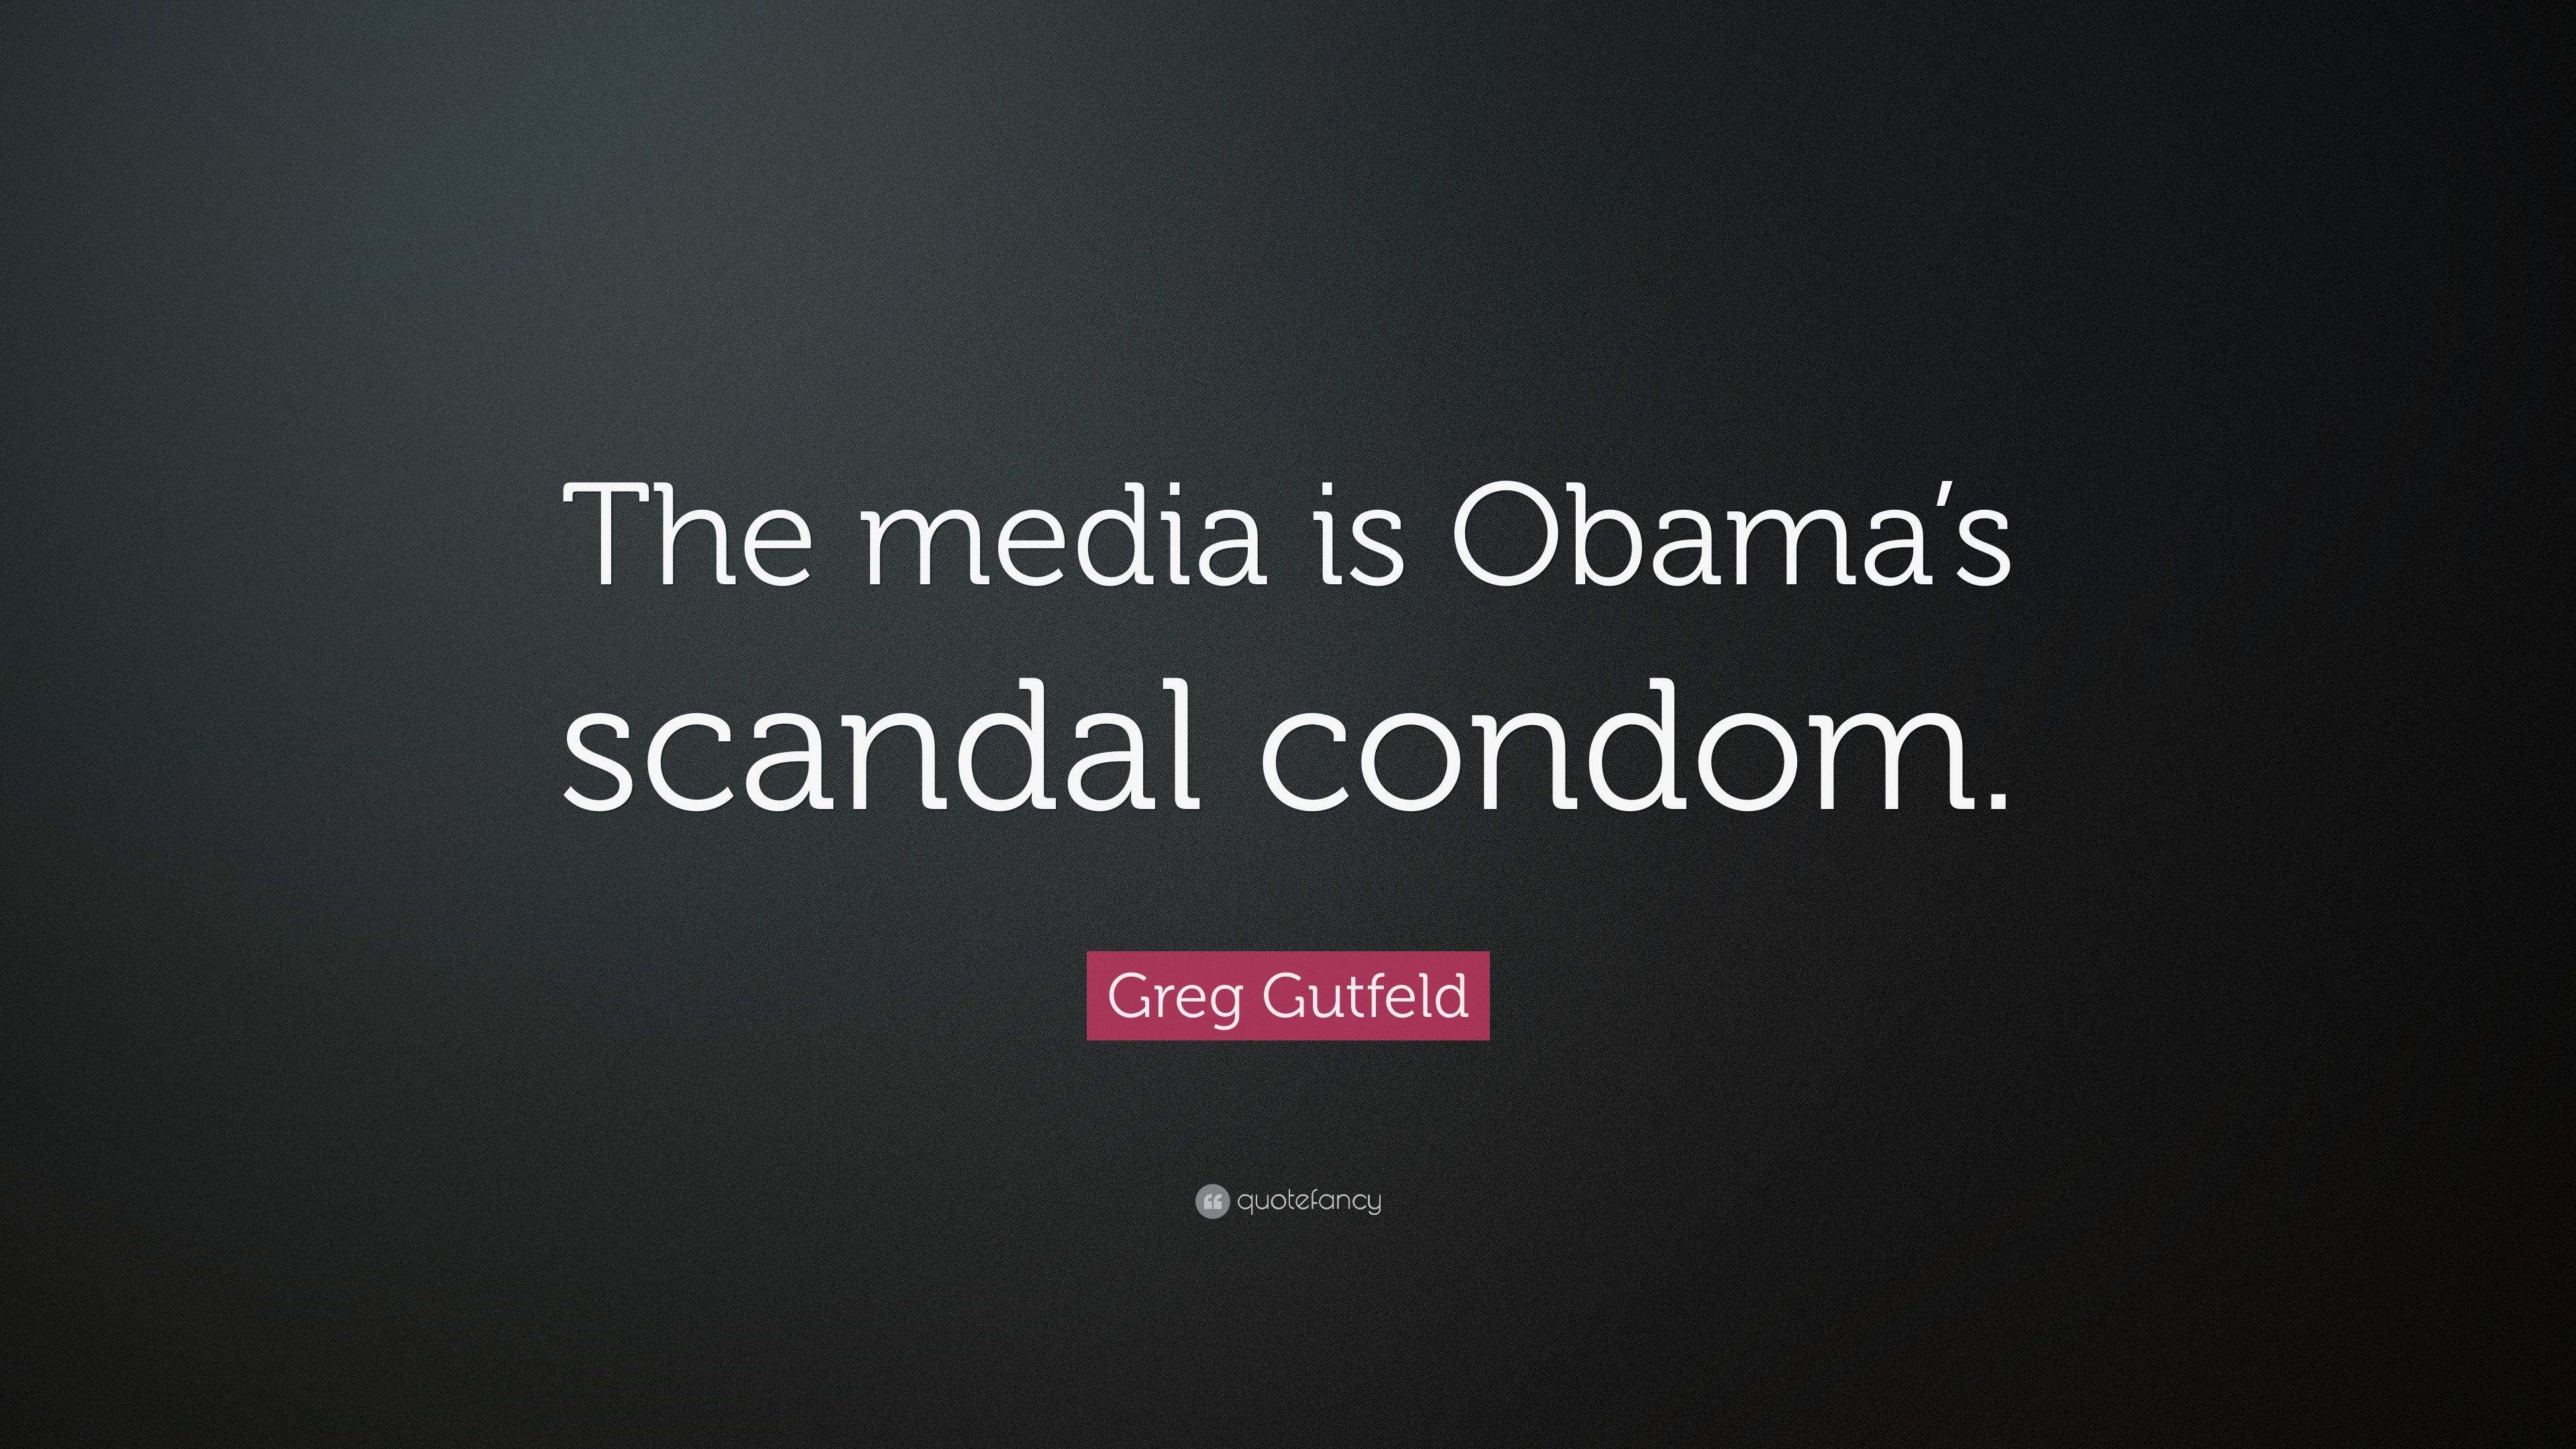 Greg Gutfeld Quote: “The media is Obama's scandal condom.” 7